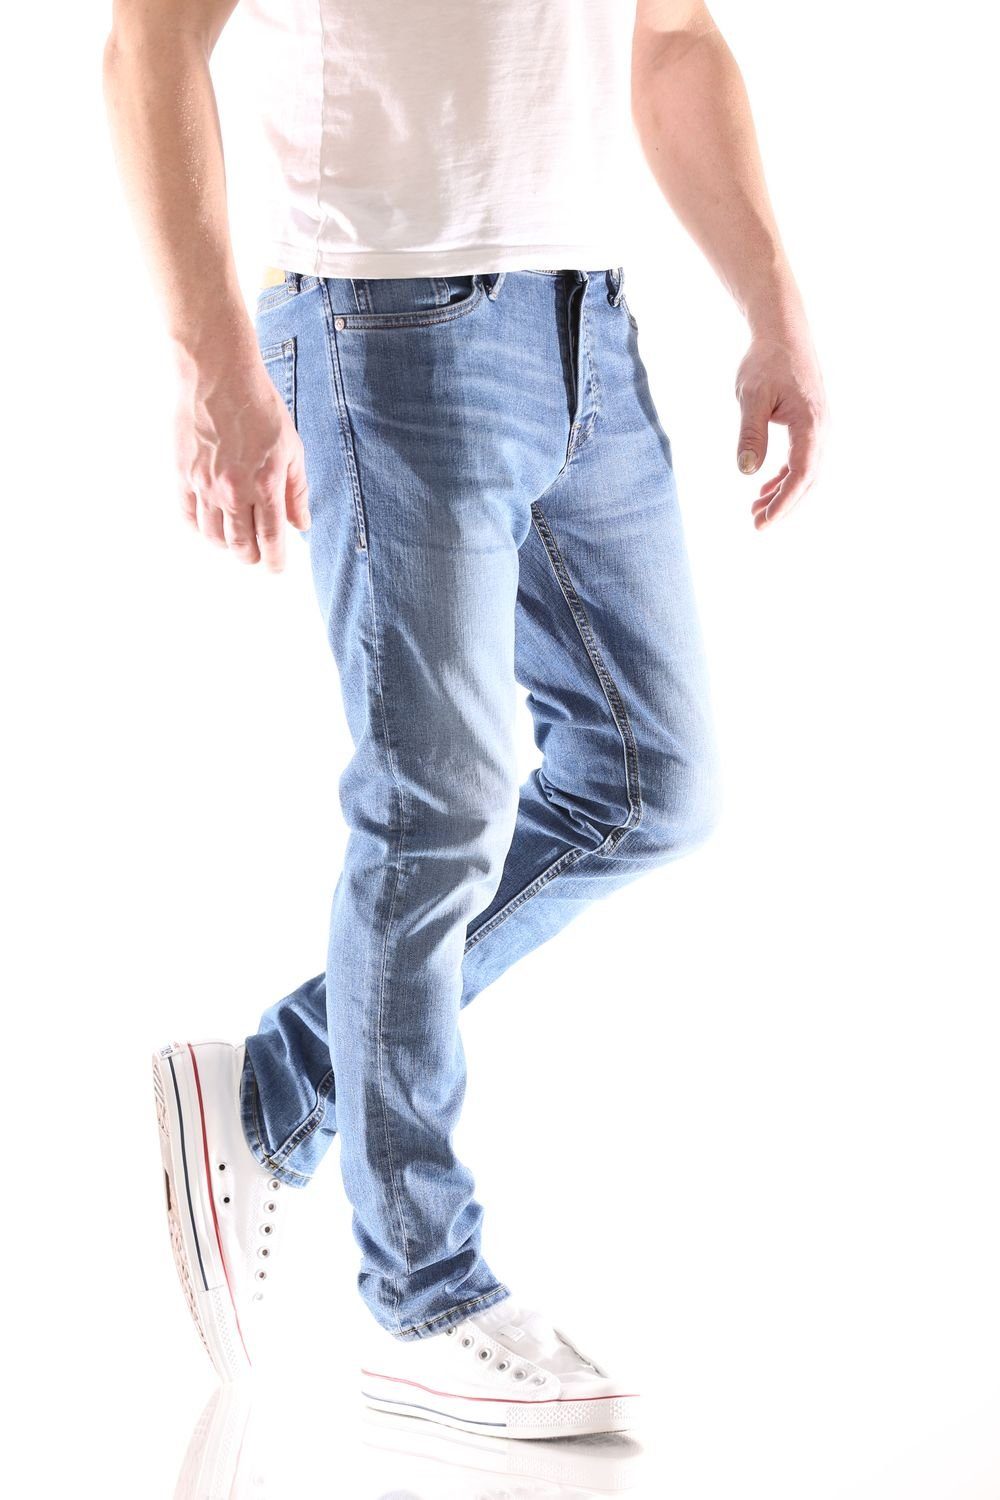 Fit & Medium & Jack Blue Jones Jones Jeans Slim-fit-Jeans Herren Slim Glenn Jack Original